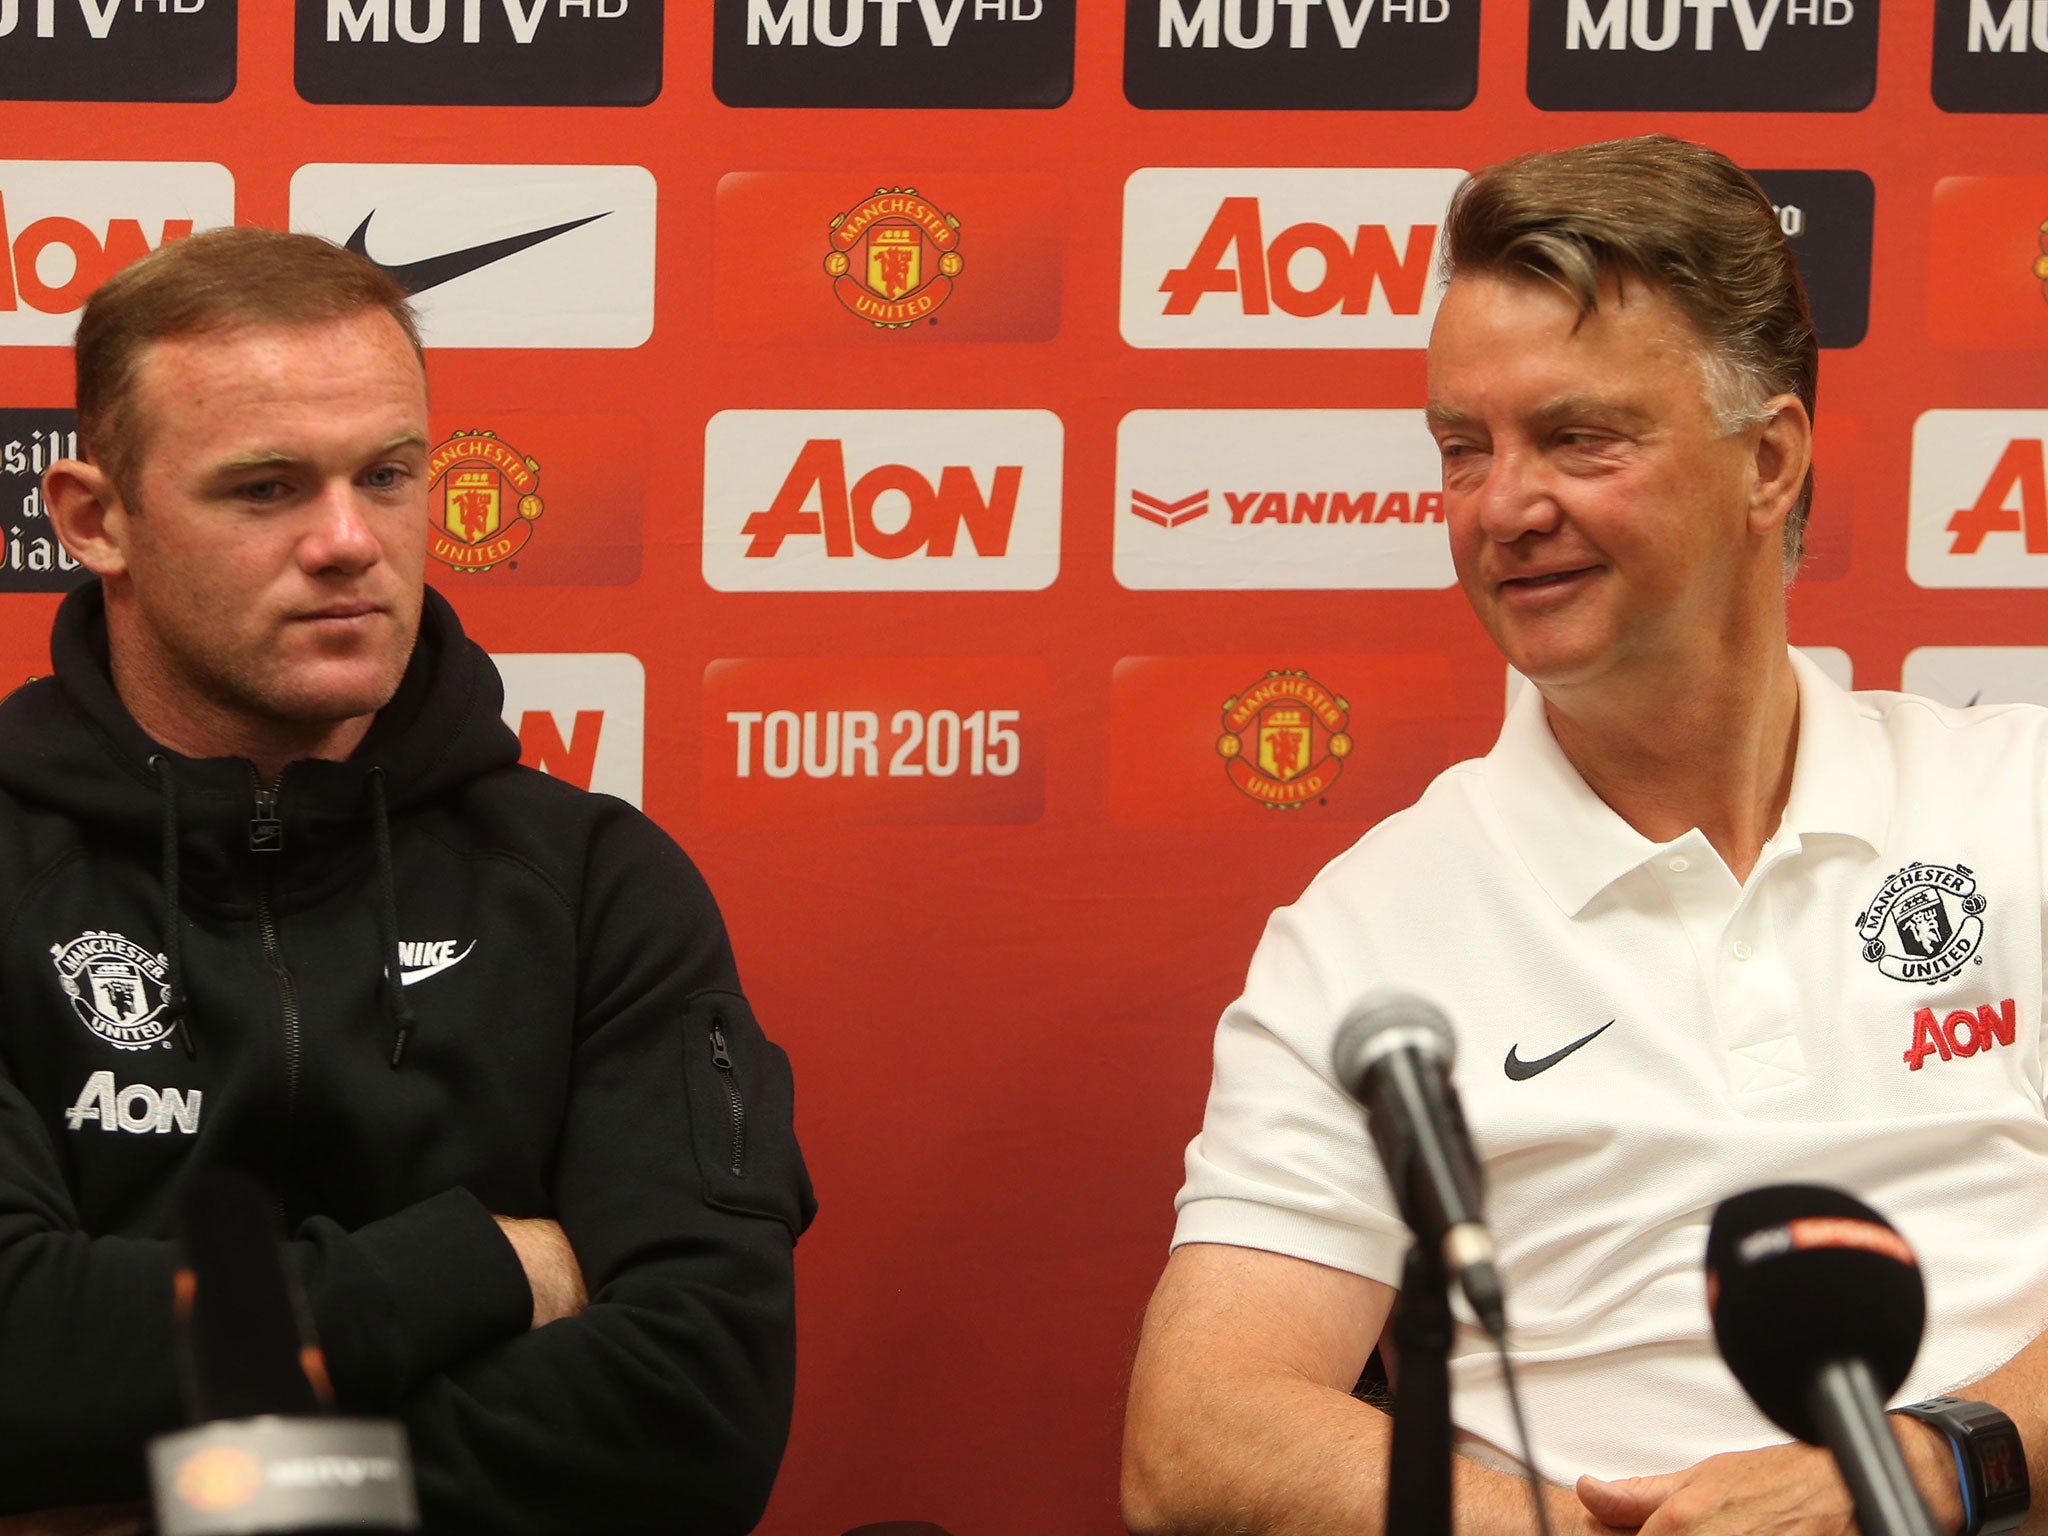 Wayne Rooney at a press conference alongside Louis van Gaal